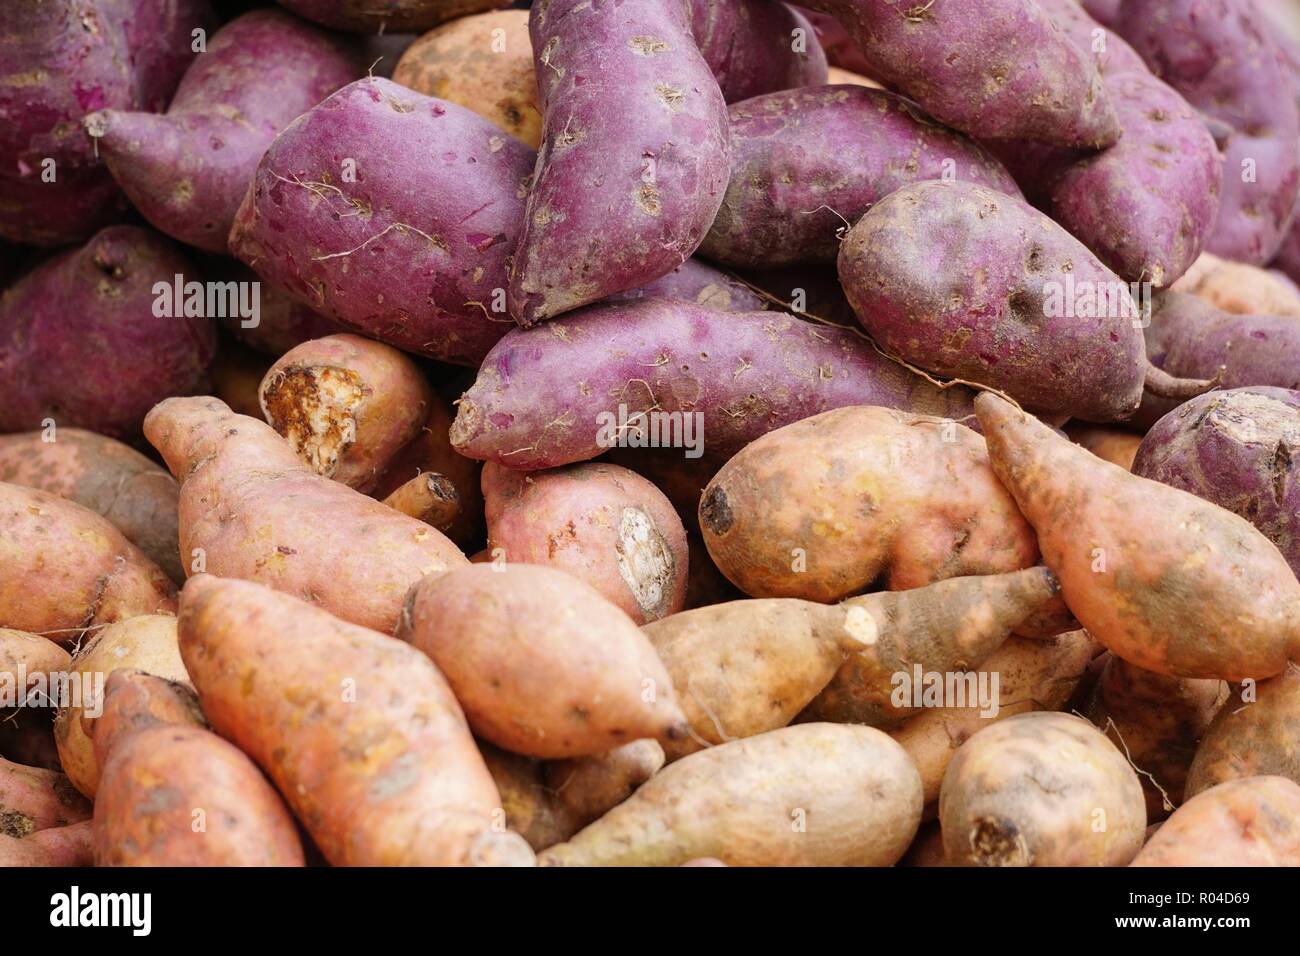 Purple and yellow sweet  potatoes at market display. Stock Photo